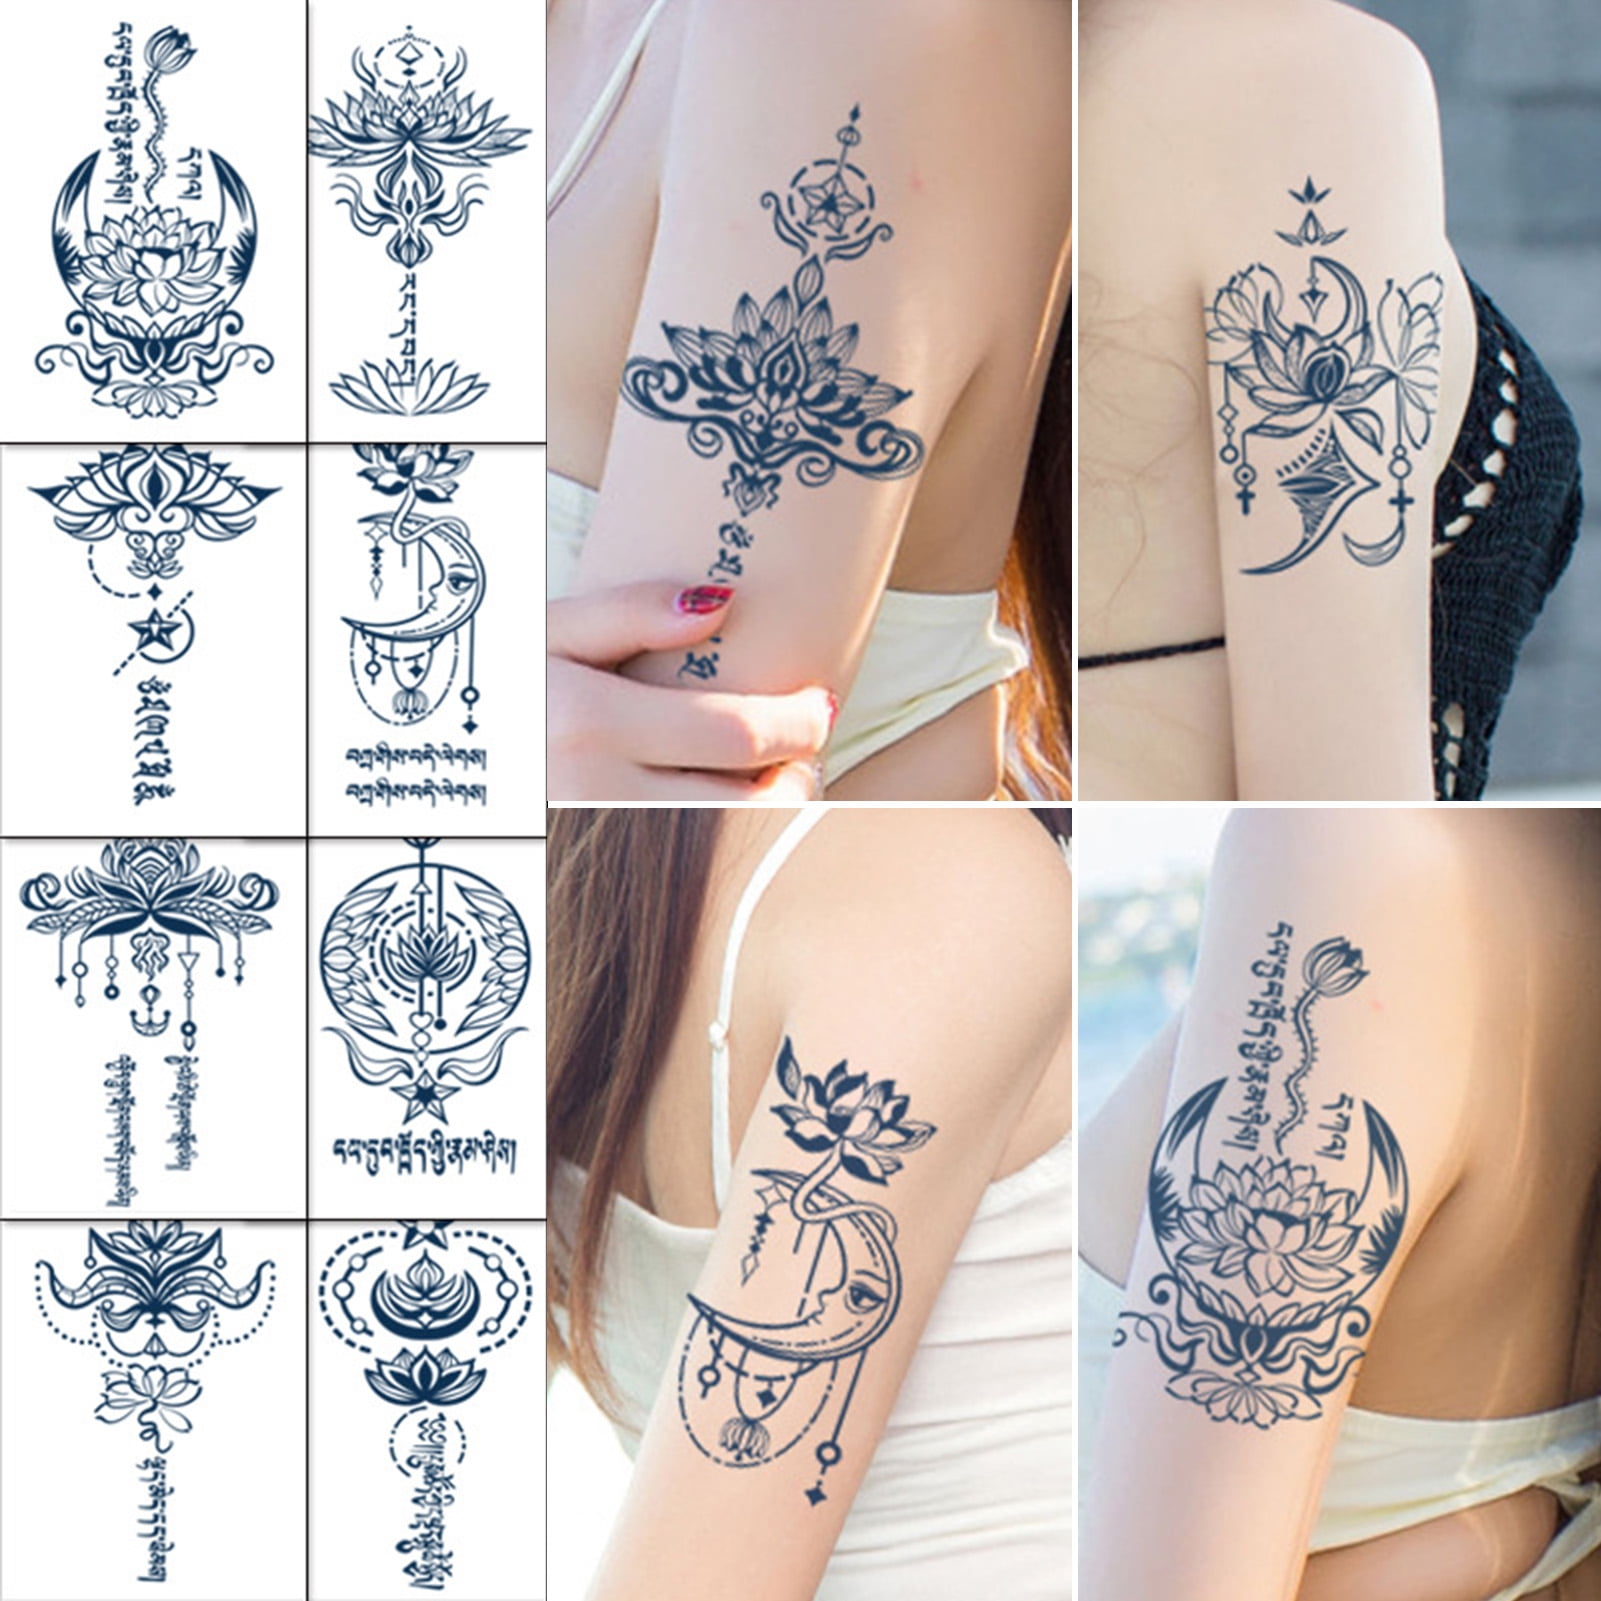 101 Amazing Sanskrit Tattoo Ideas That Will Blow Your Mind! | Sanskrit  tattoo, Tattoo designs and meanings, Picture tattoos